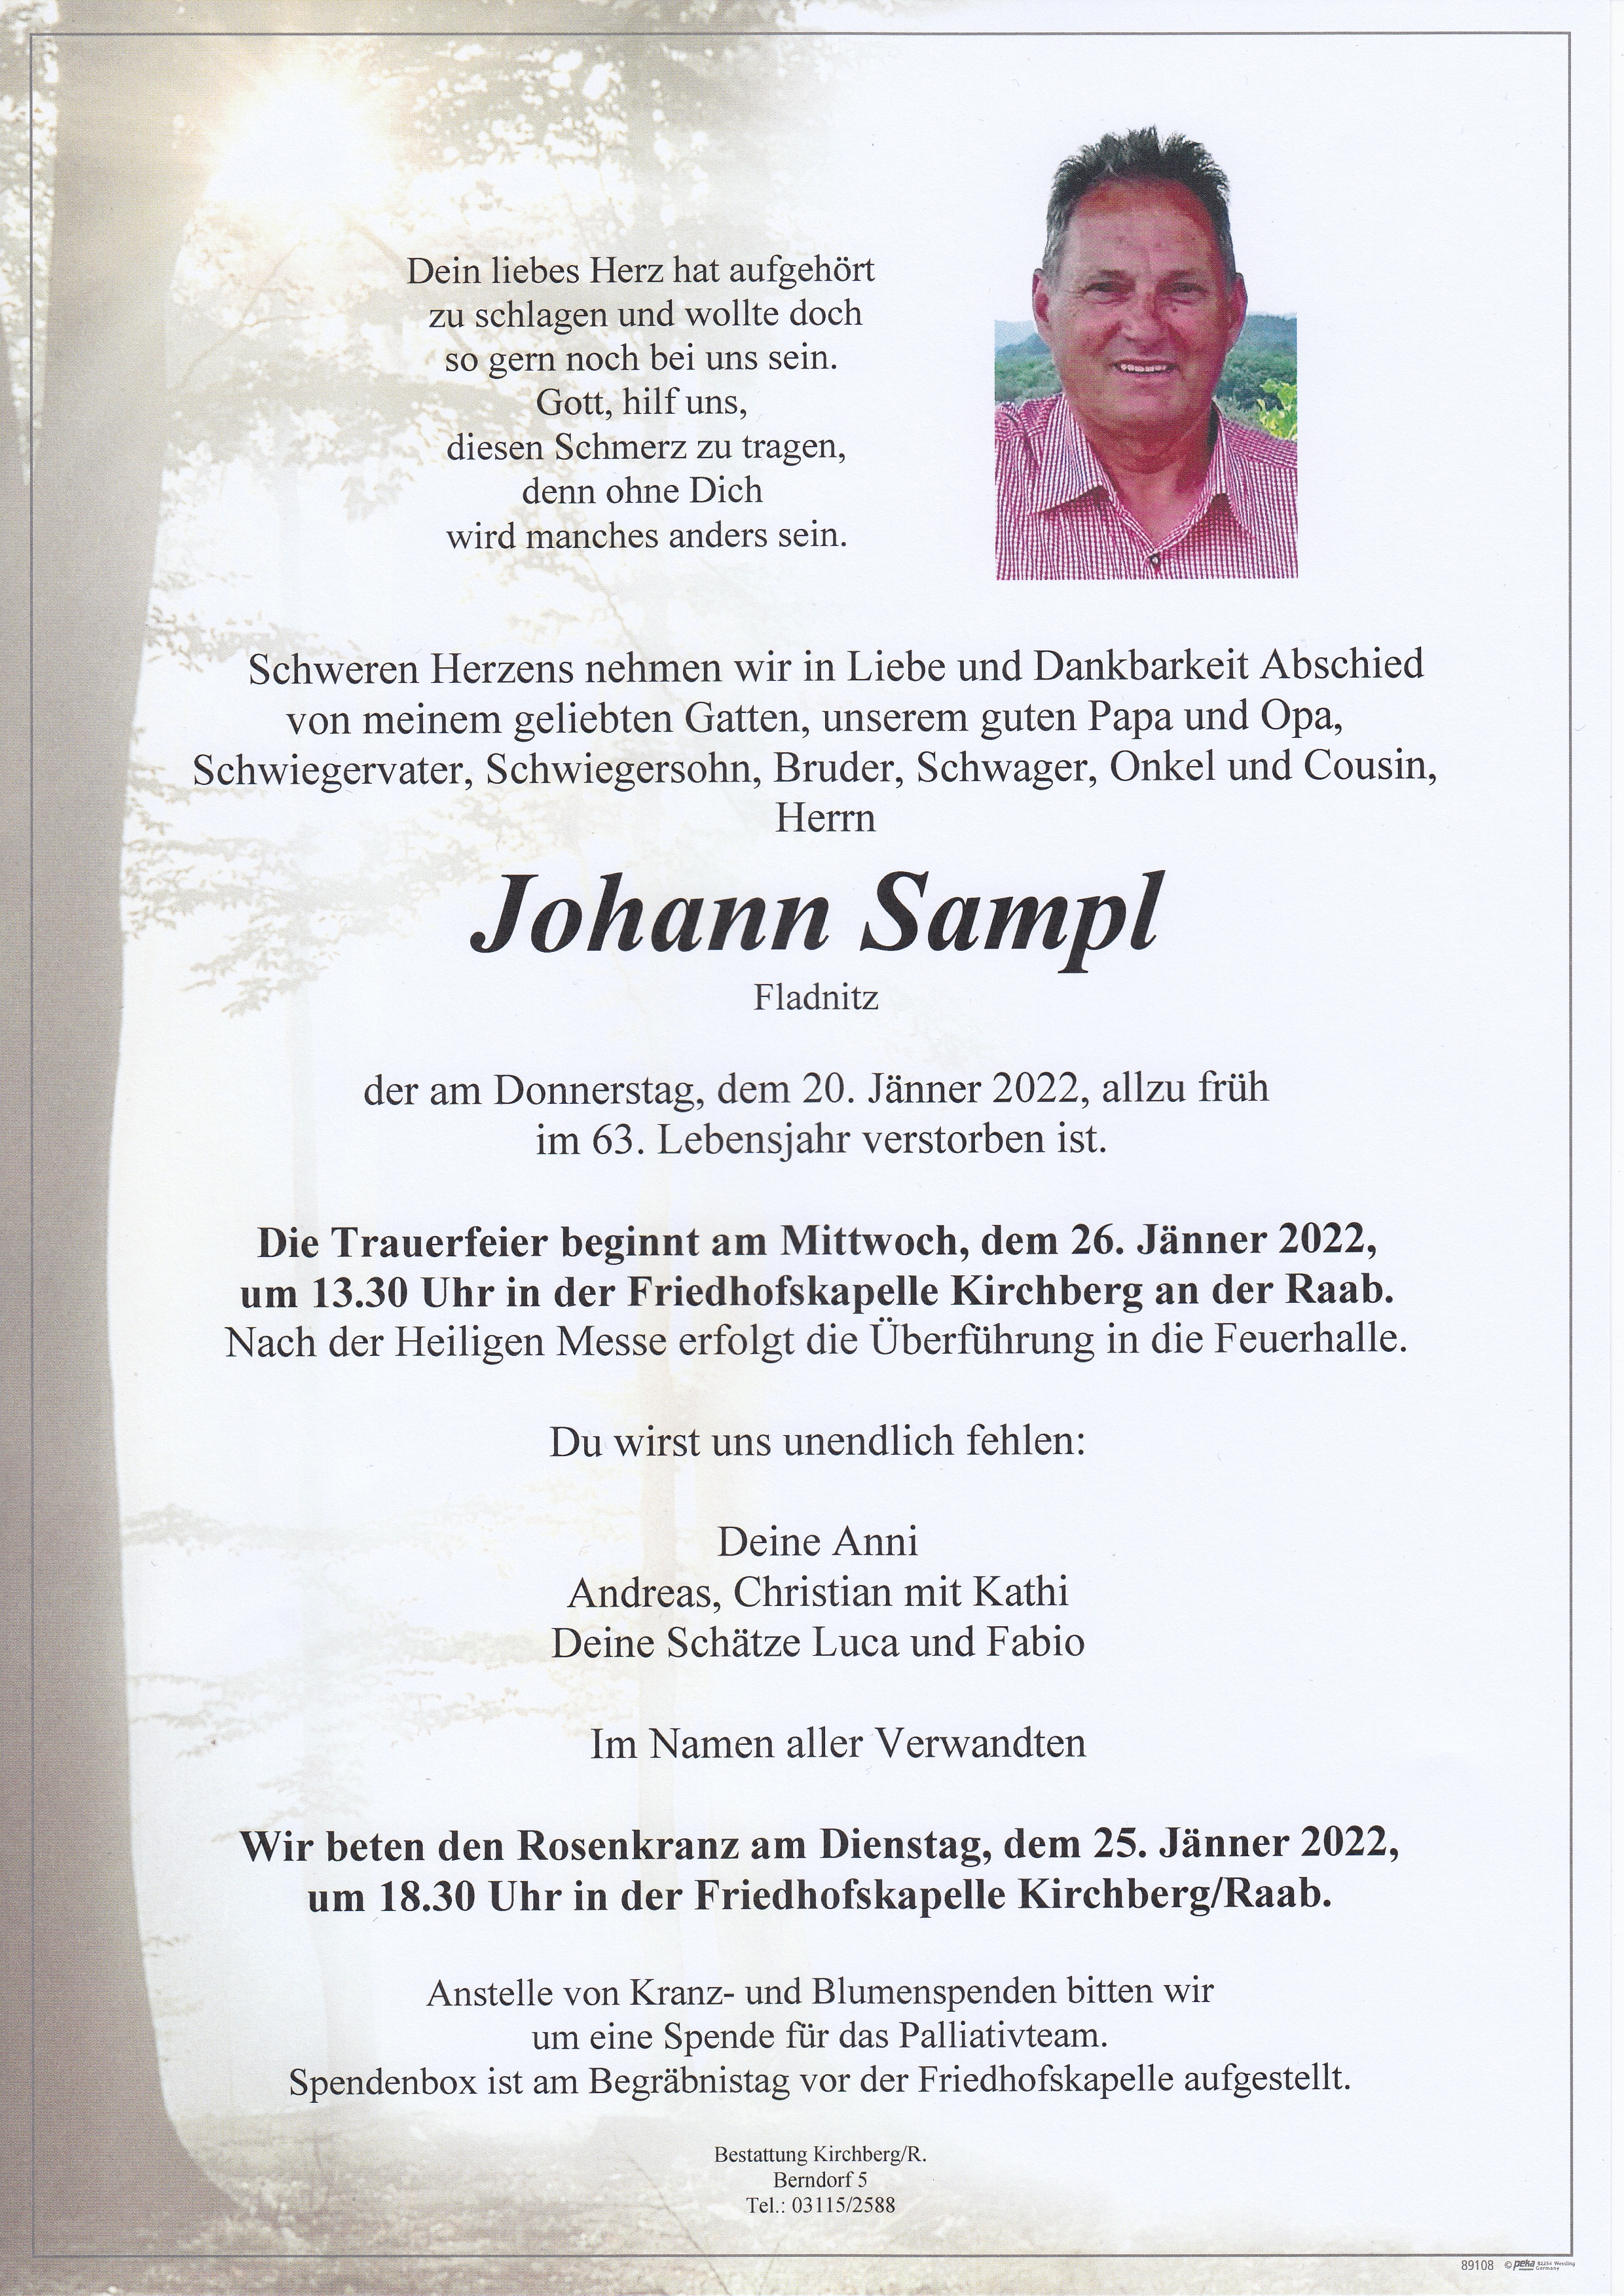 Johann Sampl